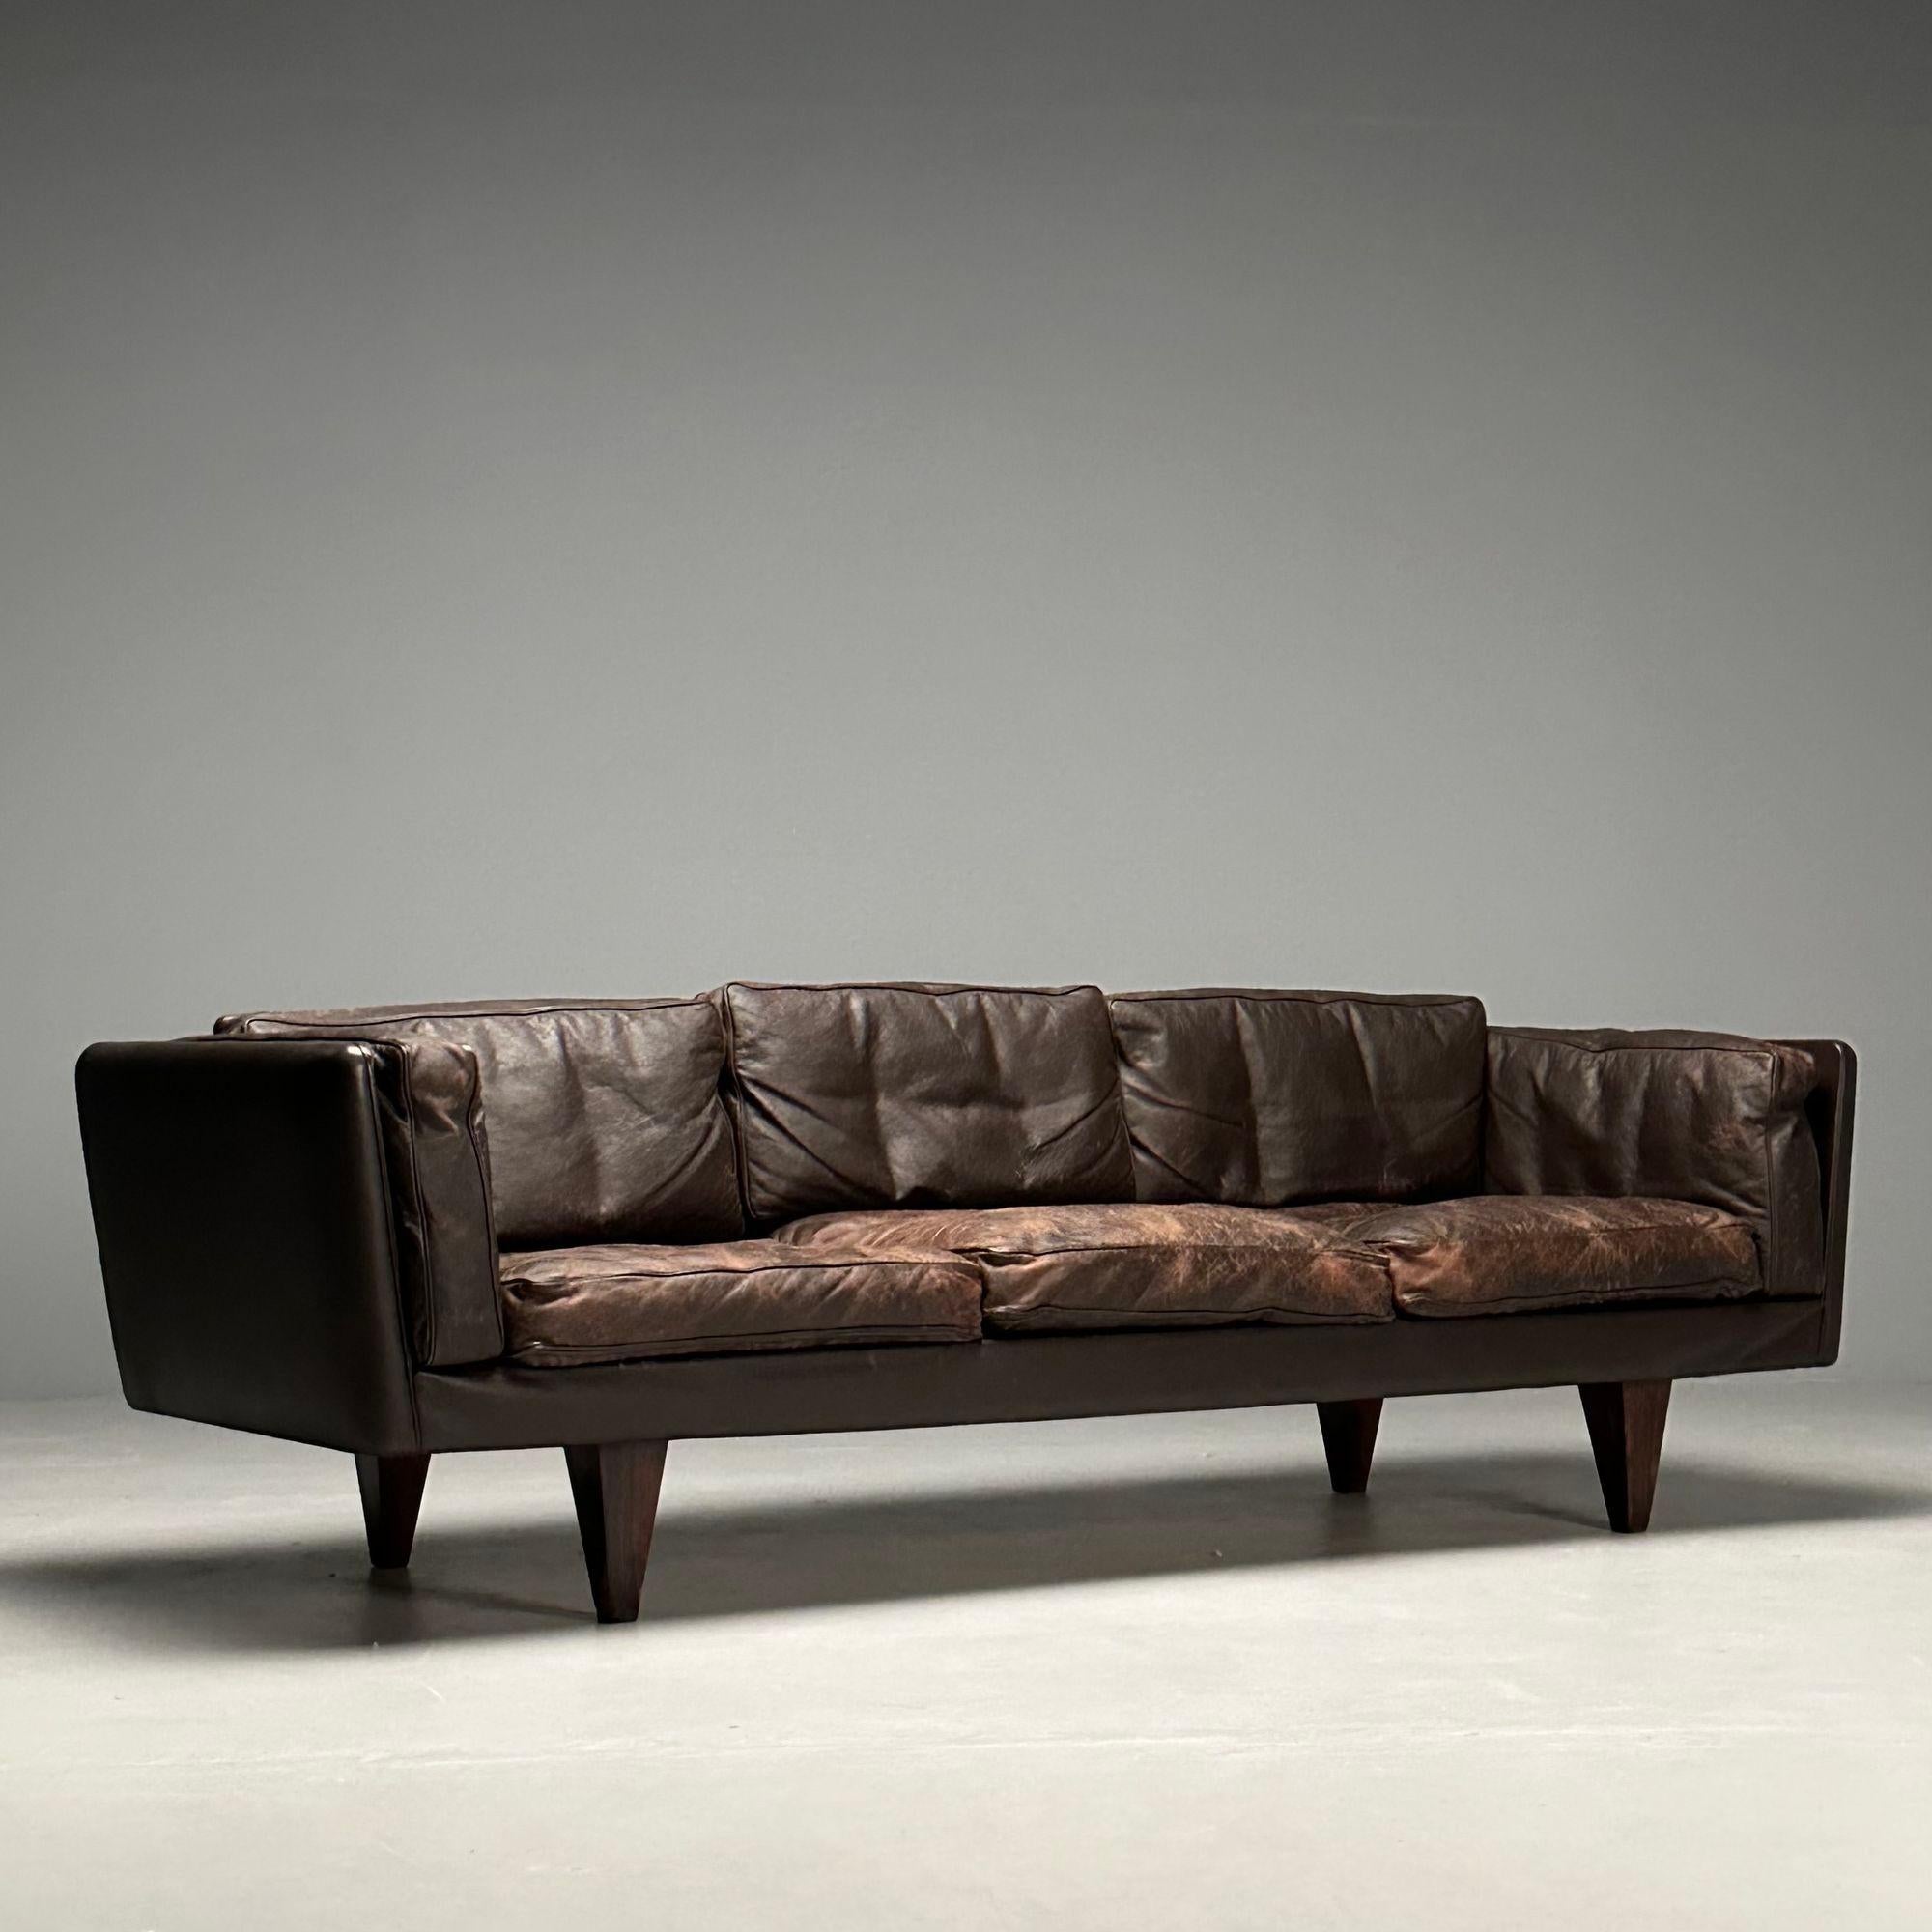 Swedish Illum Wikkelsö, Danish Mid-Century Modern Sofa, Distressed Brown Leather, 1960s For Sale